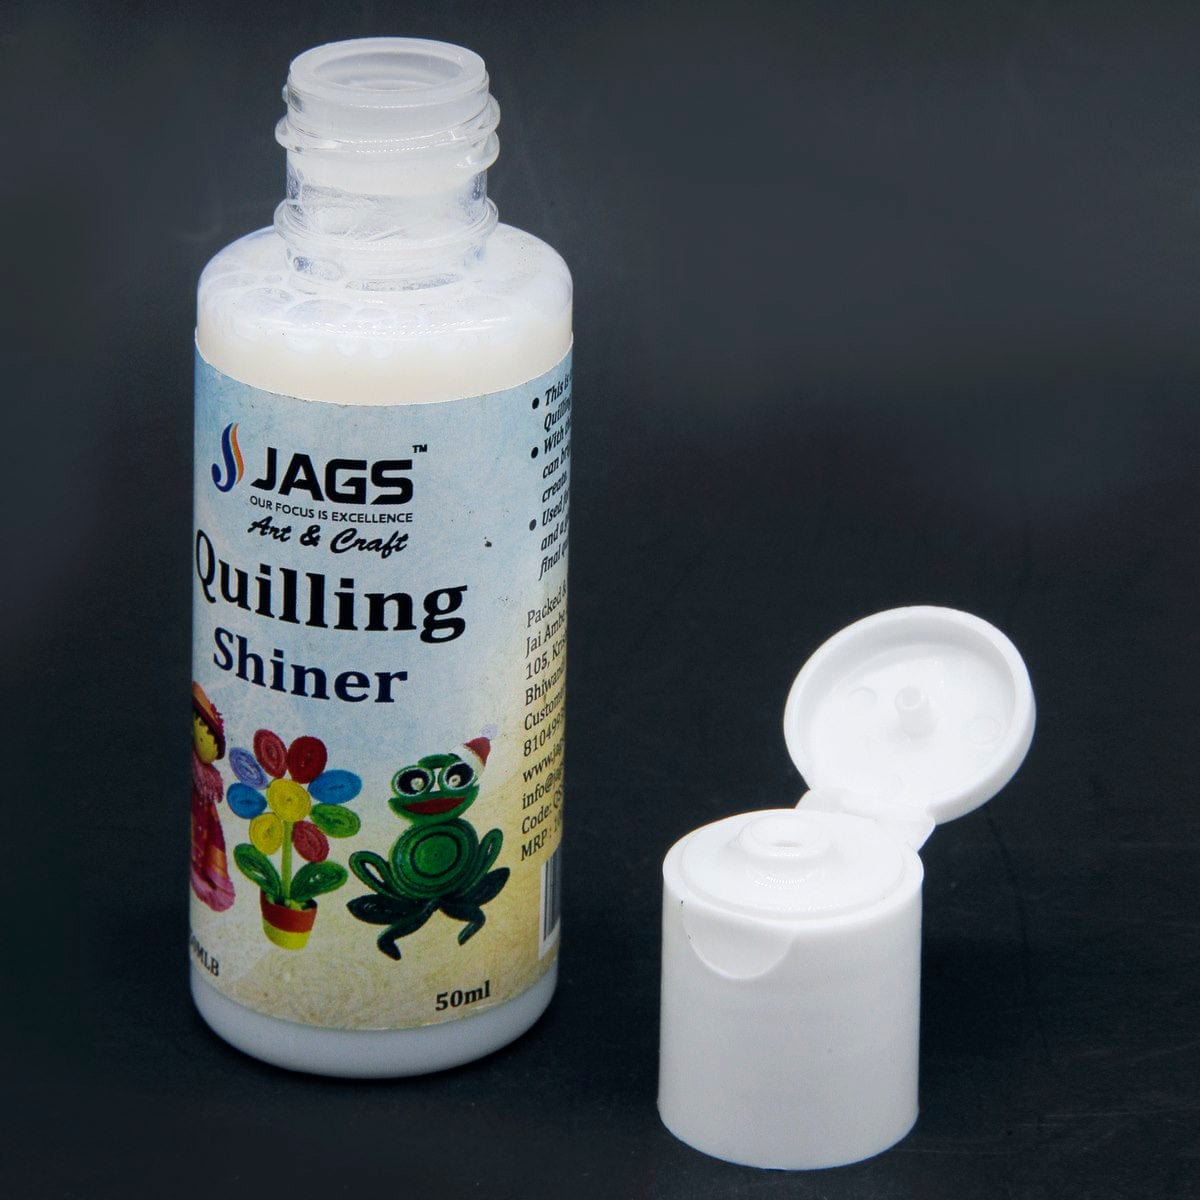 jags-mumbai Quilling Quilling Shiner 50ML Bottle